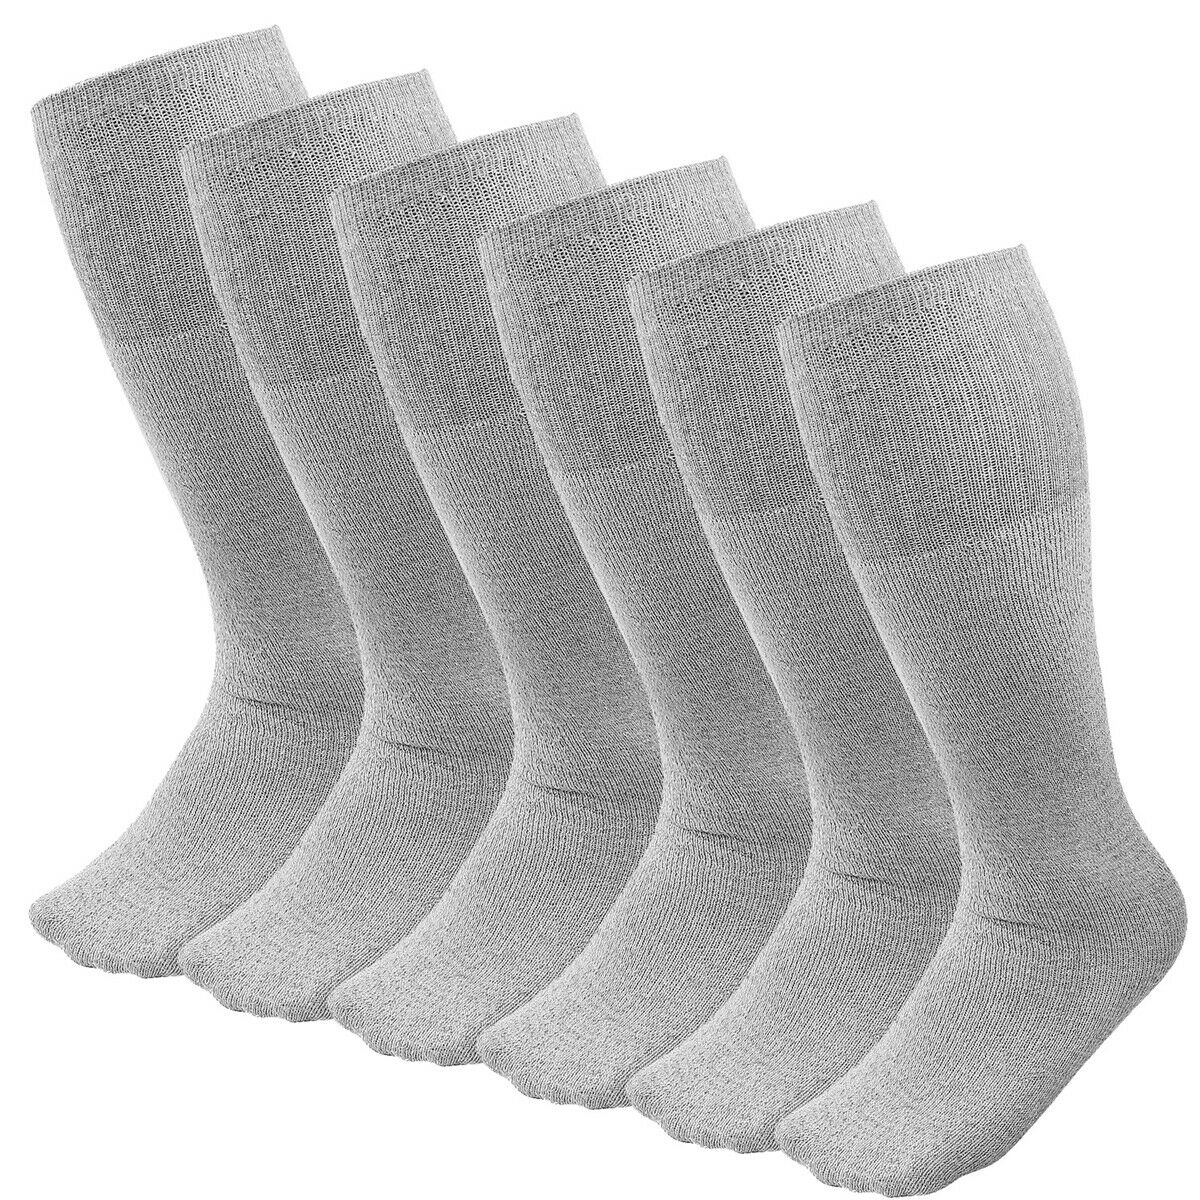 YUEVO SPORTS Men's Athletic Socks Breathable Wicking Cotton Cushioned Crew  Work Socks Walking Socks Men size 6-9 Multipack (5 Pairs) : :  Fashion